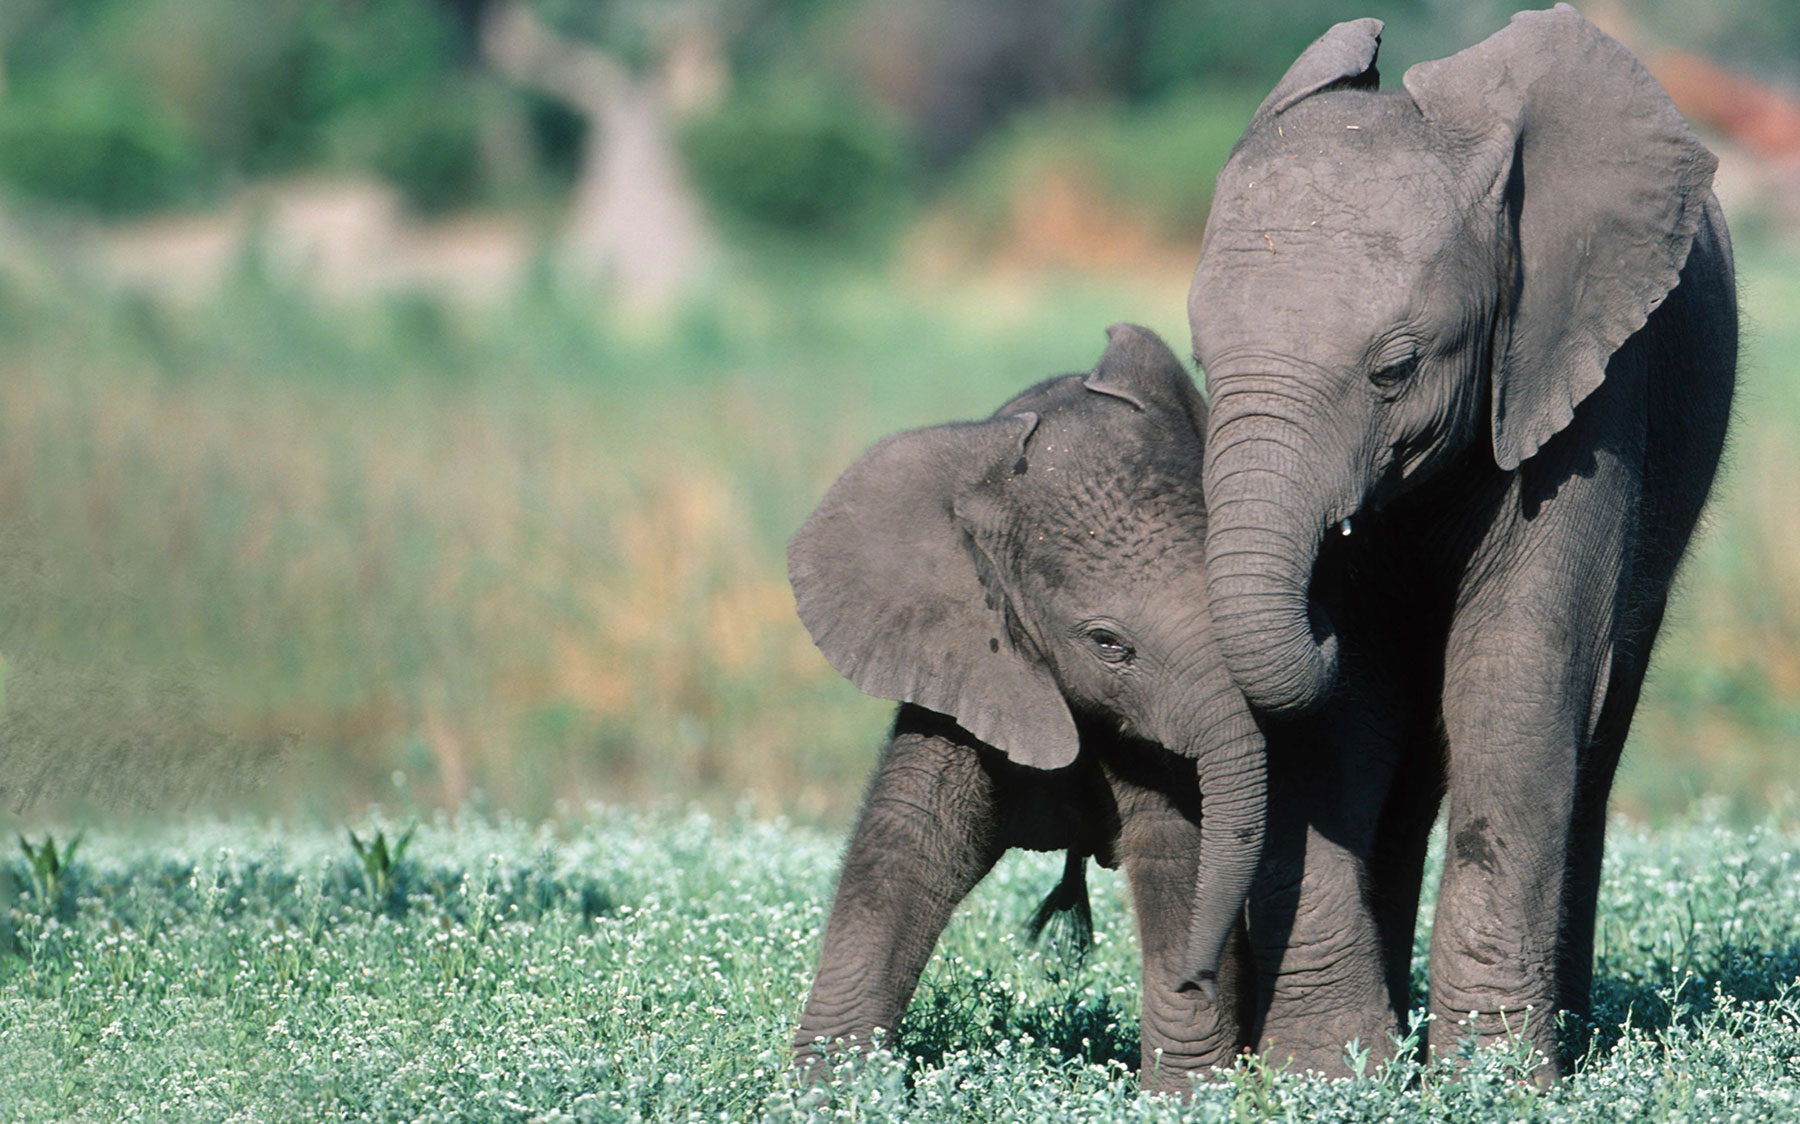 Elephant leaning against another elephant.